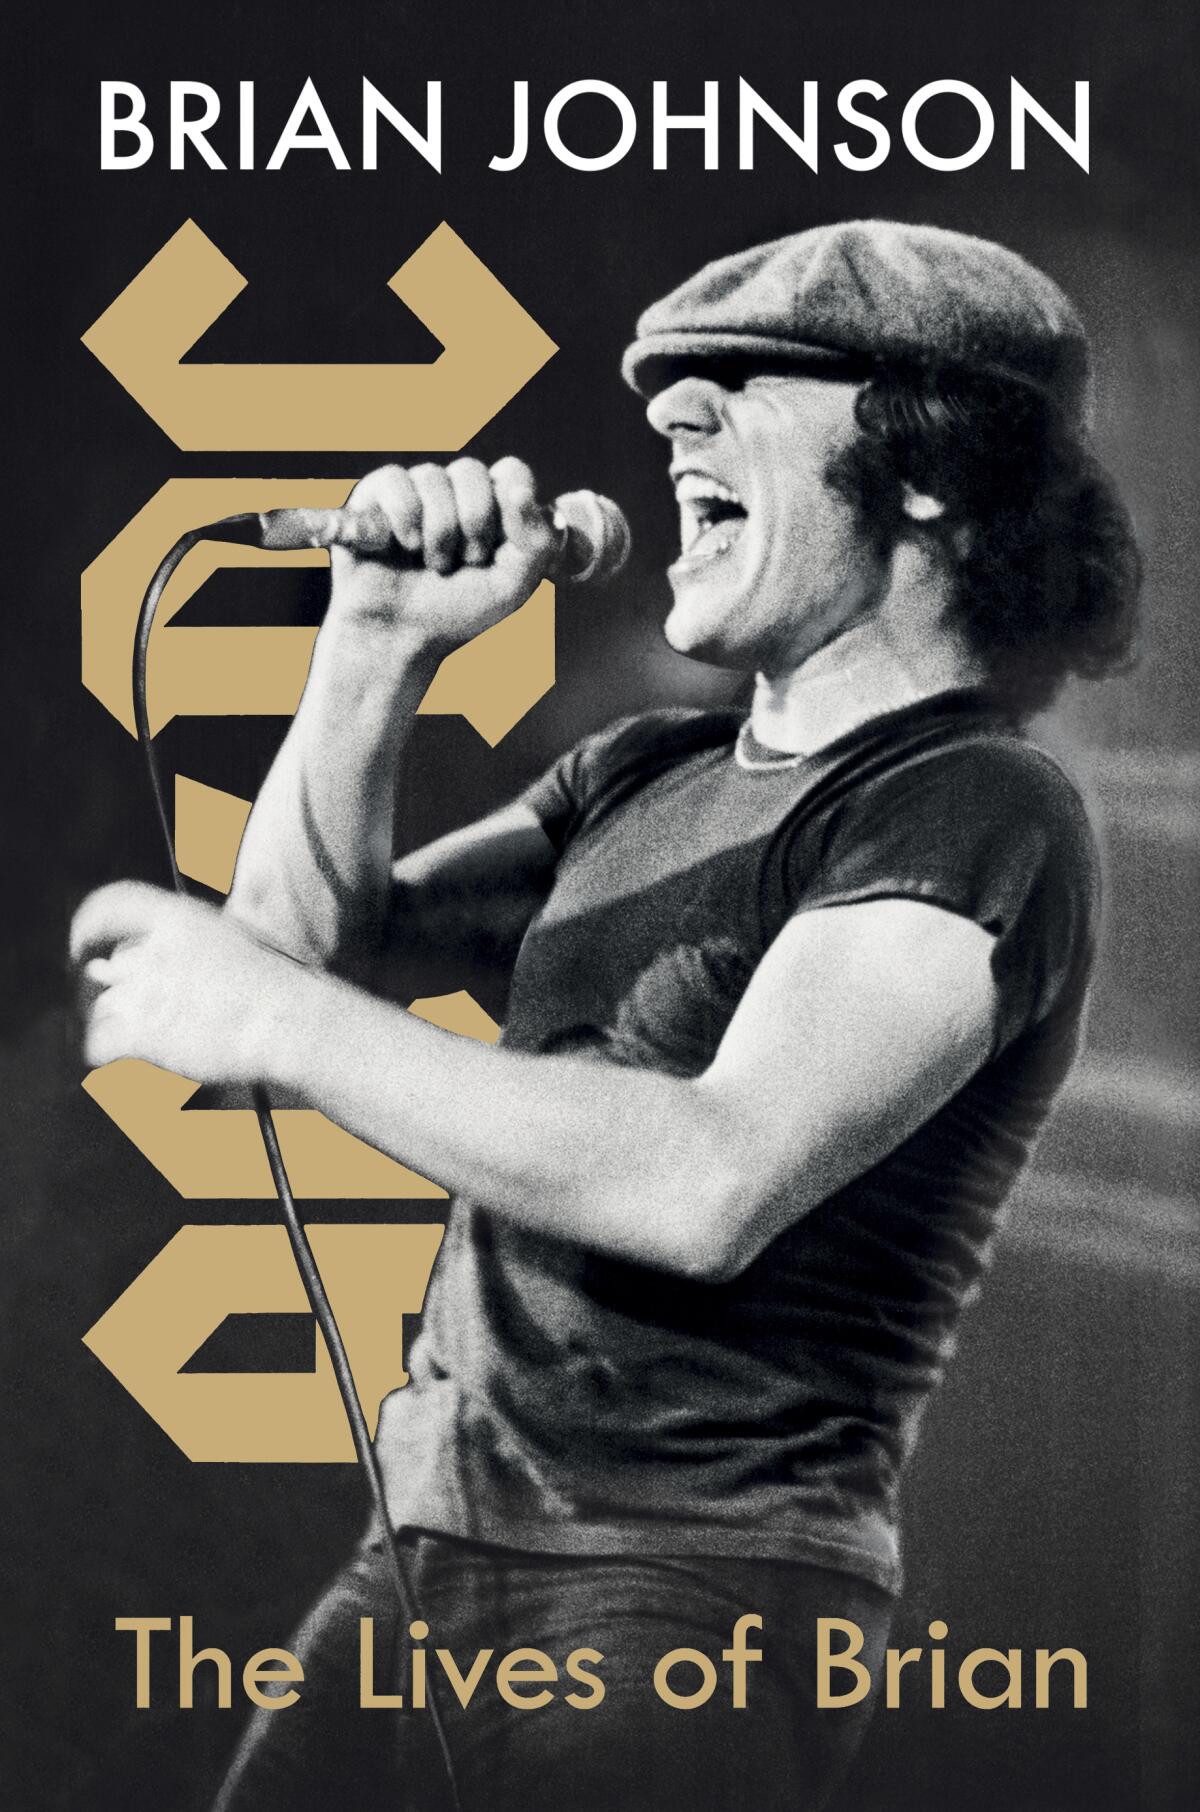 AC/DC's legendary career in photos